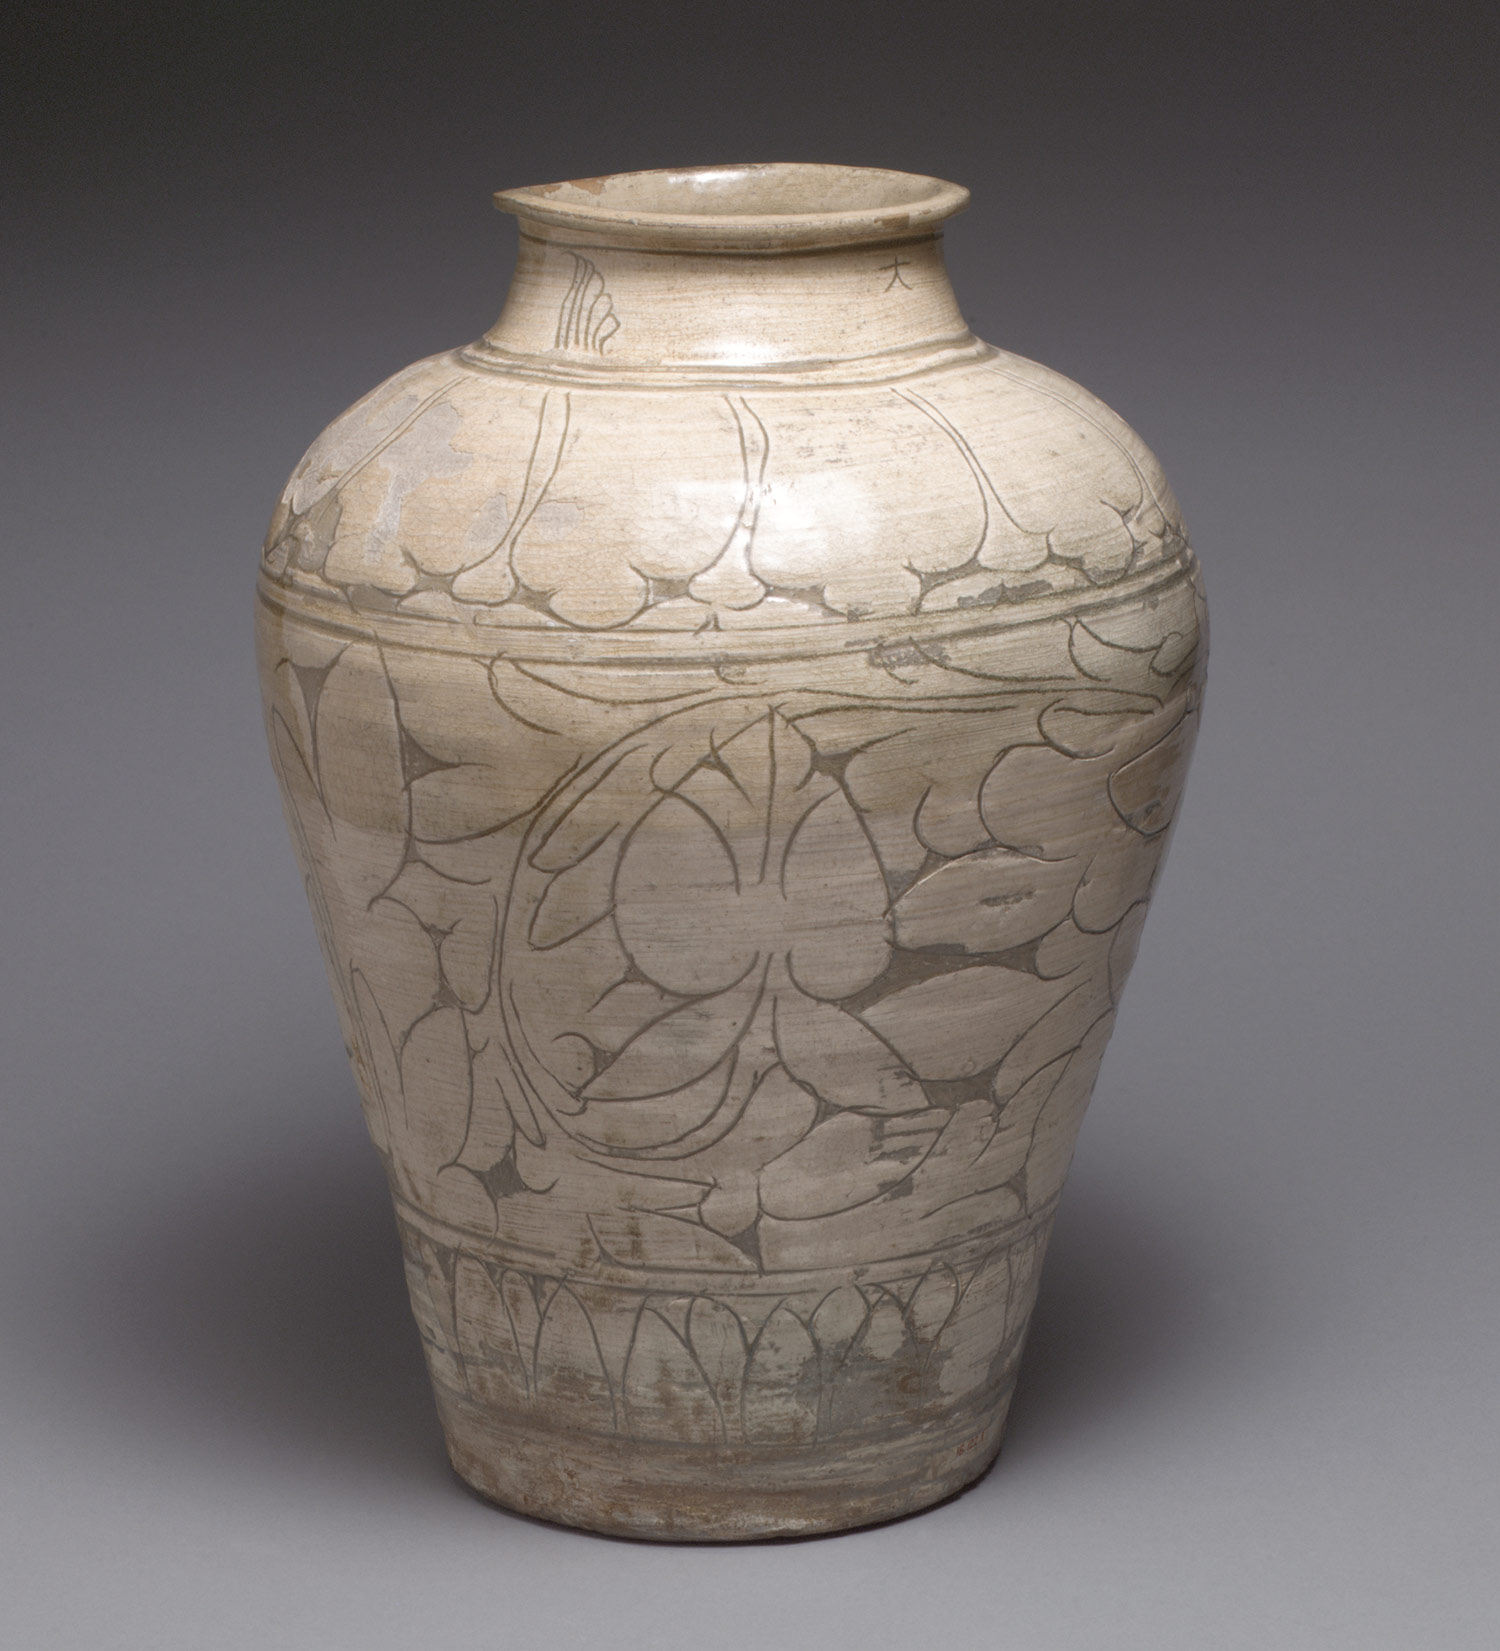 Large Korean stoneware jar from the Joseon dynasty, second half 15th century.